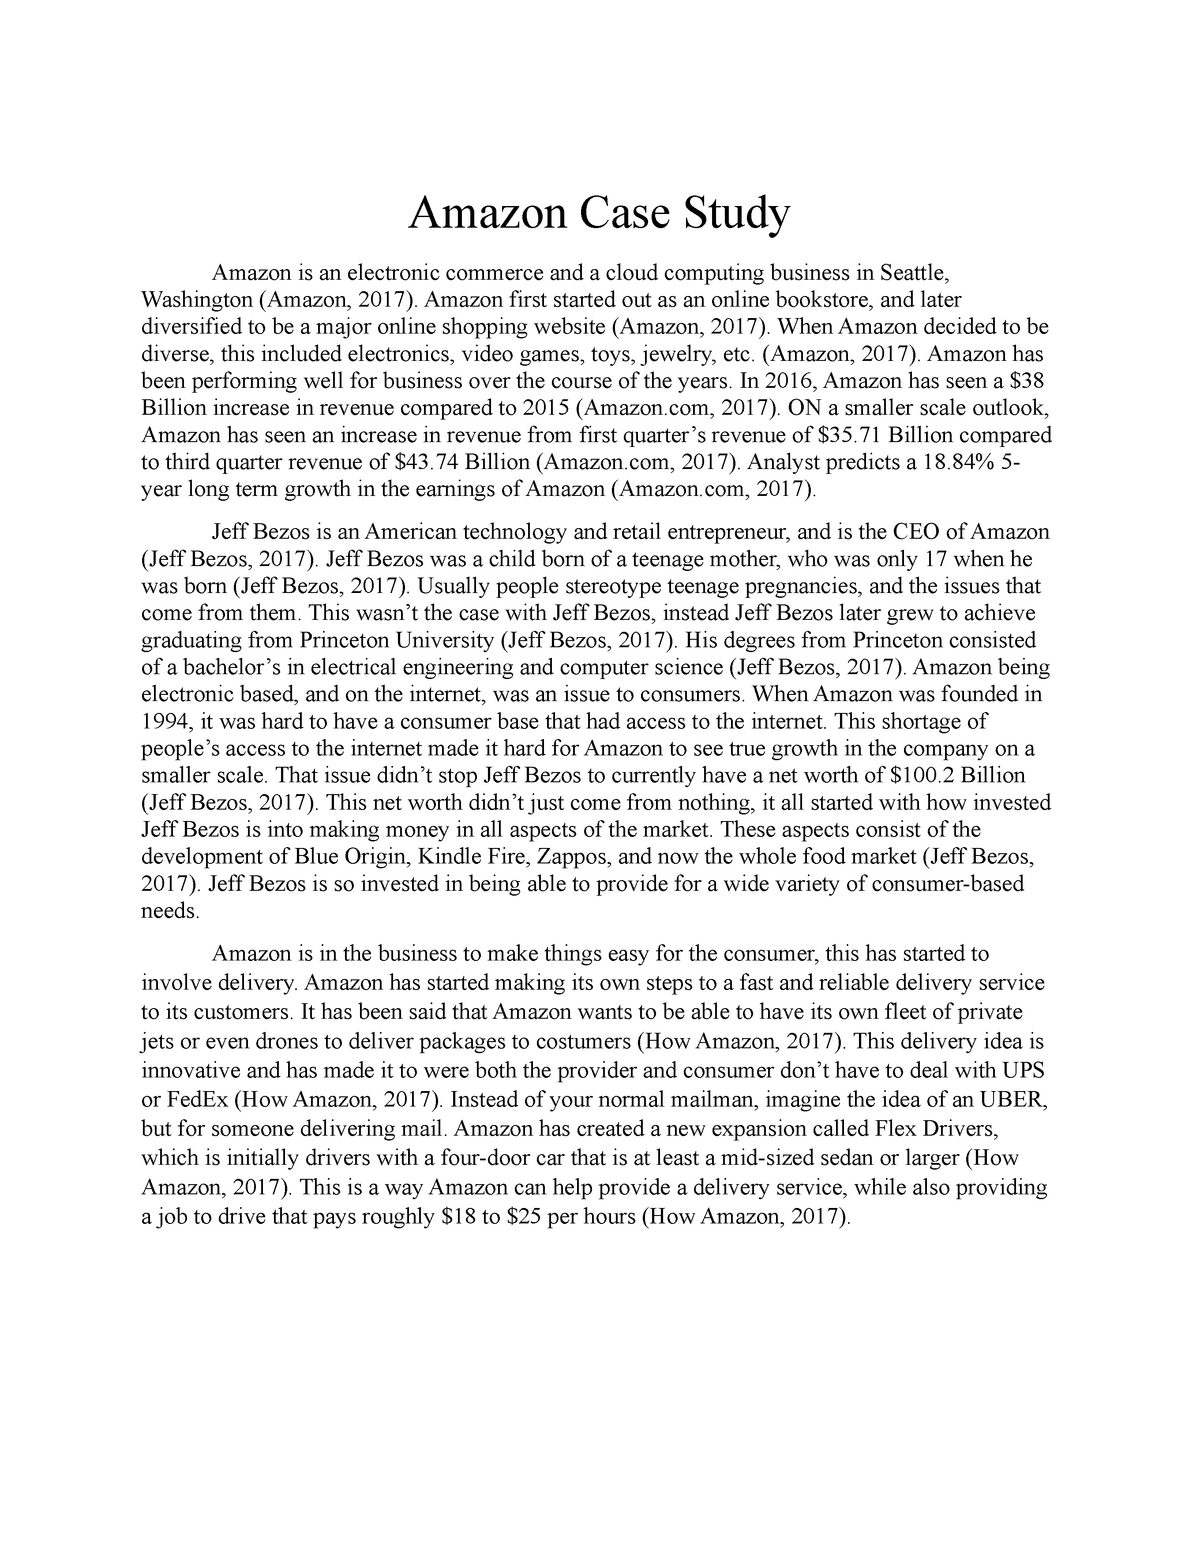 summary of amazon case study